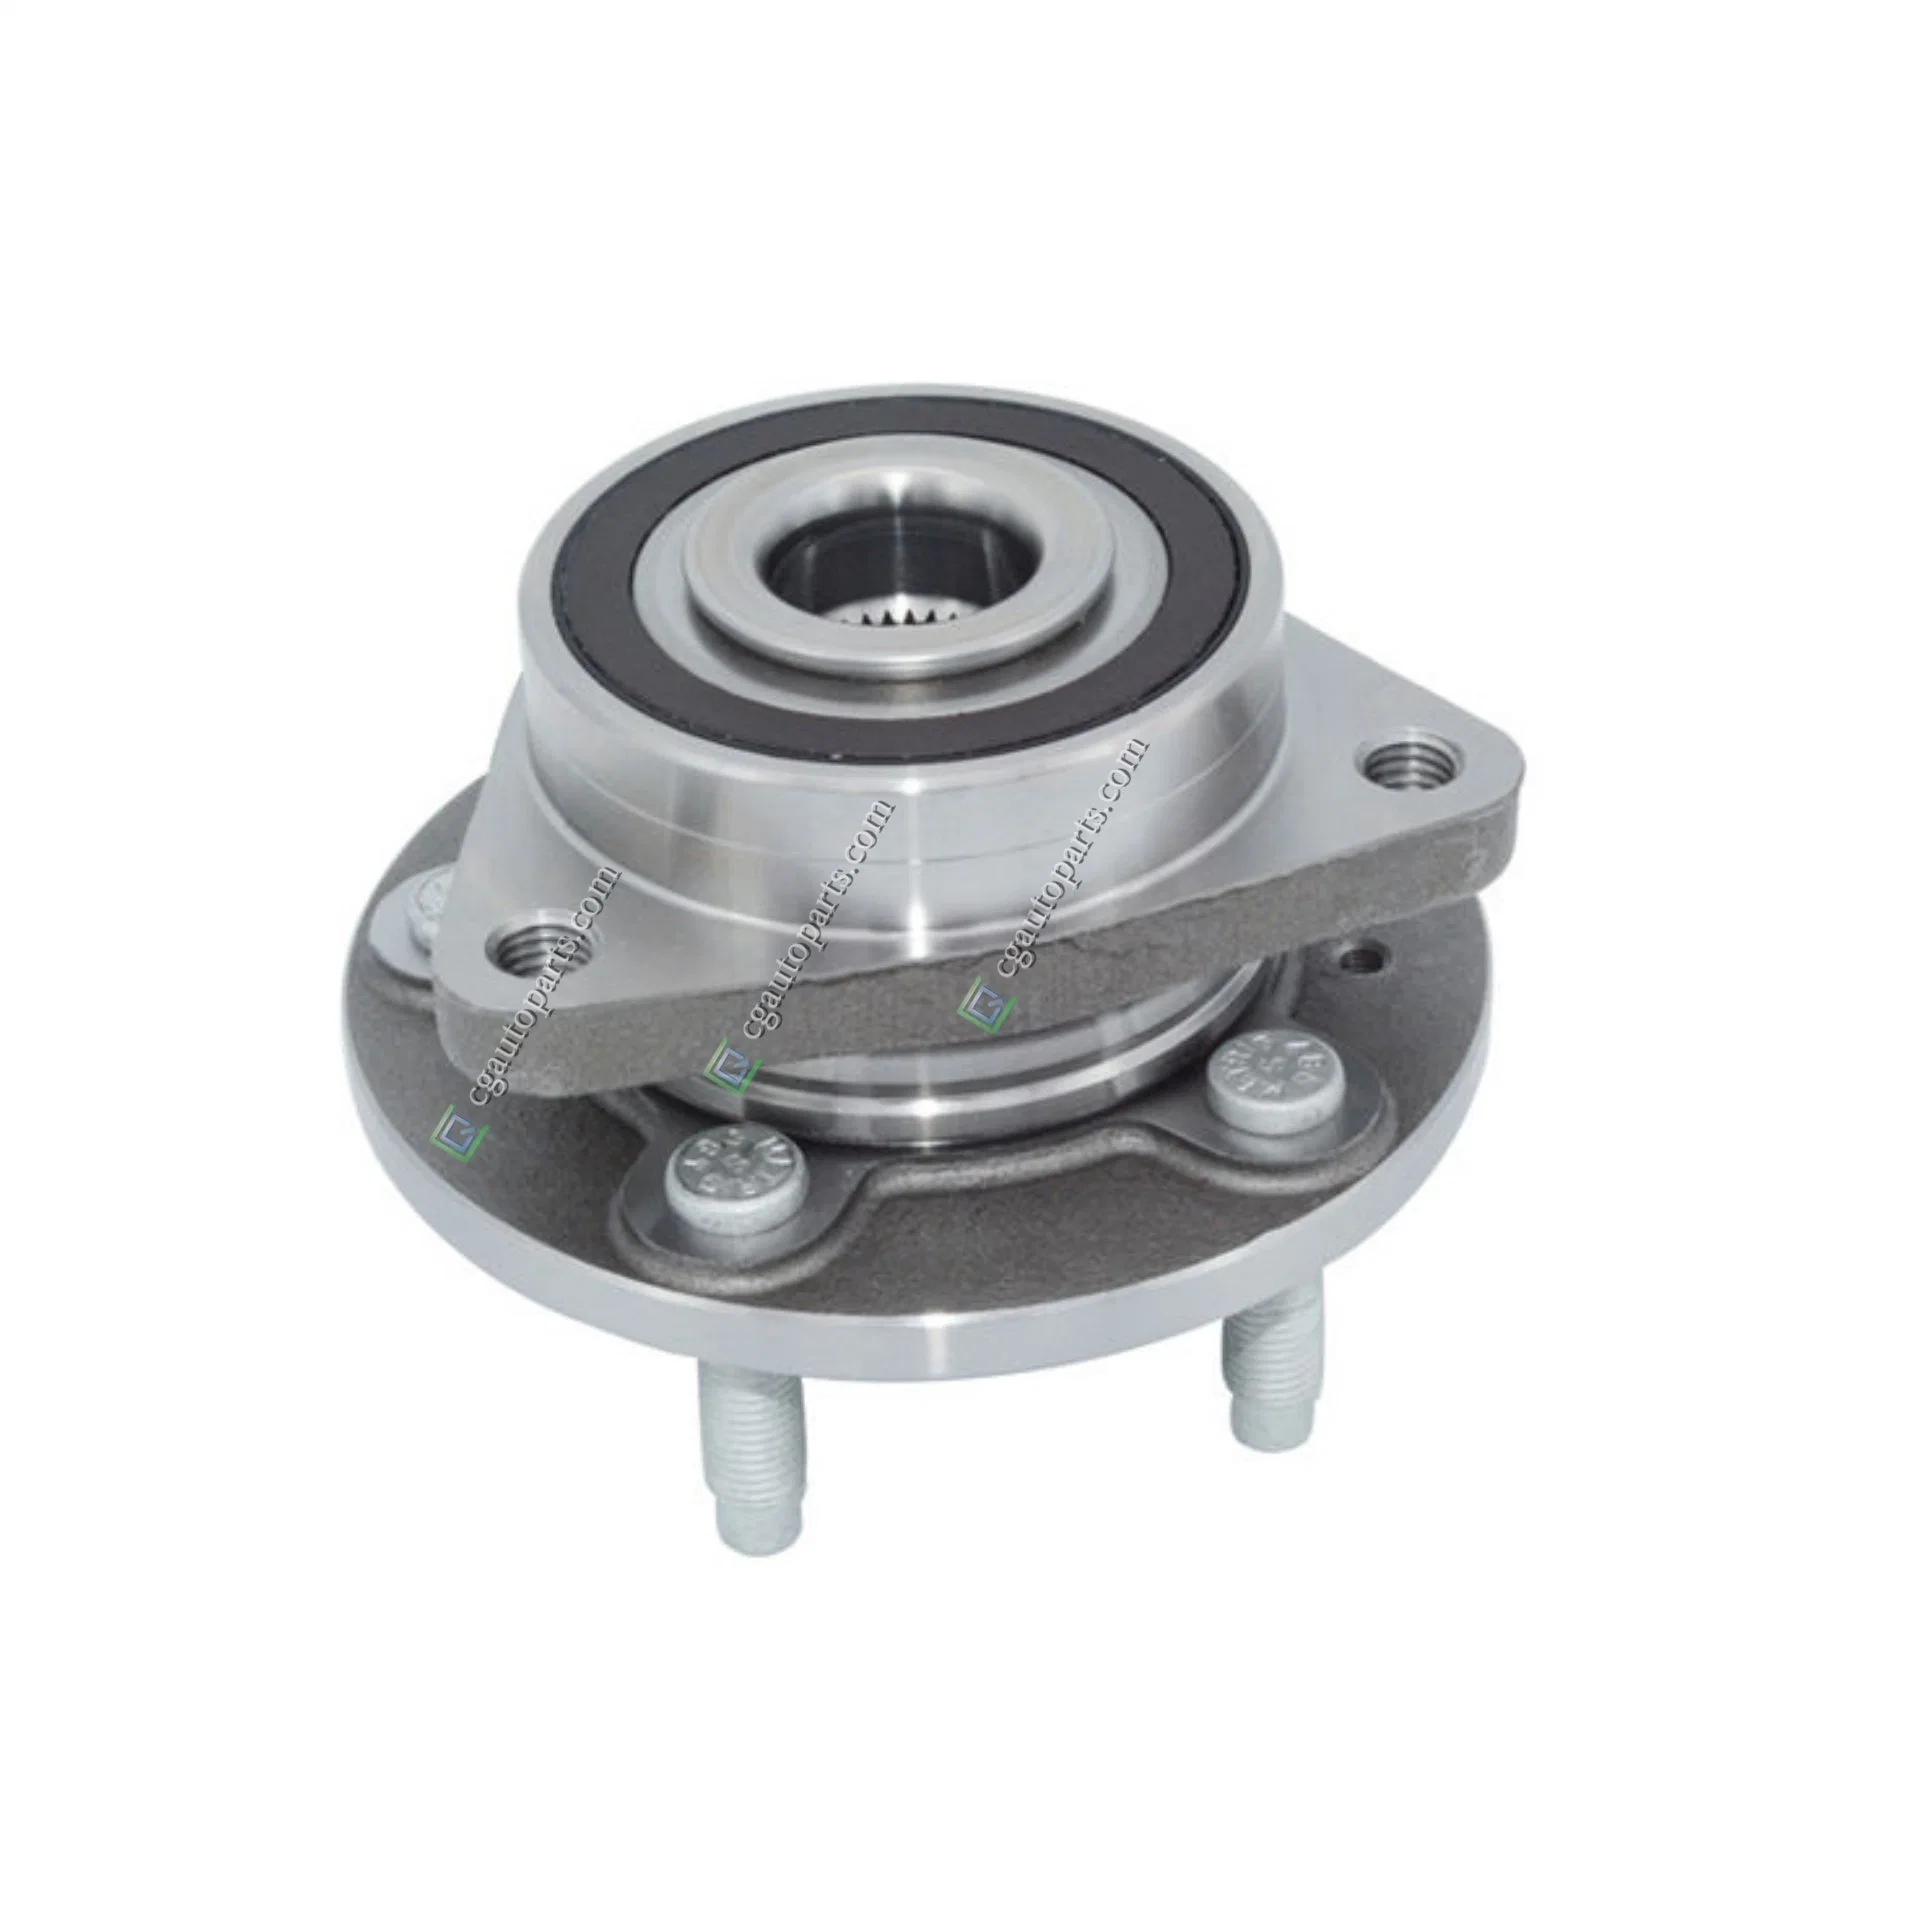 Wheel Hub Bearing Used for Chevrolet Opel Cruze 13502828 13583478 Auto Part Altatec Wheel Hub Bearing